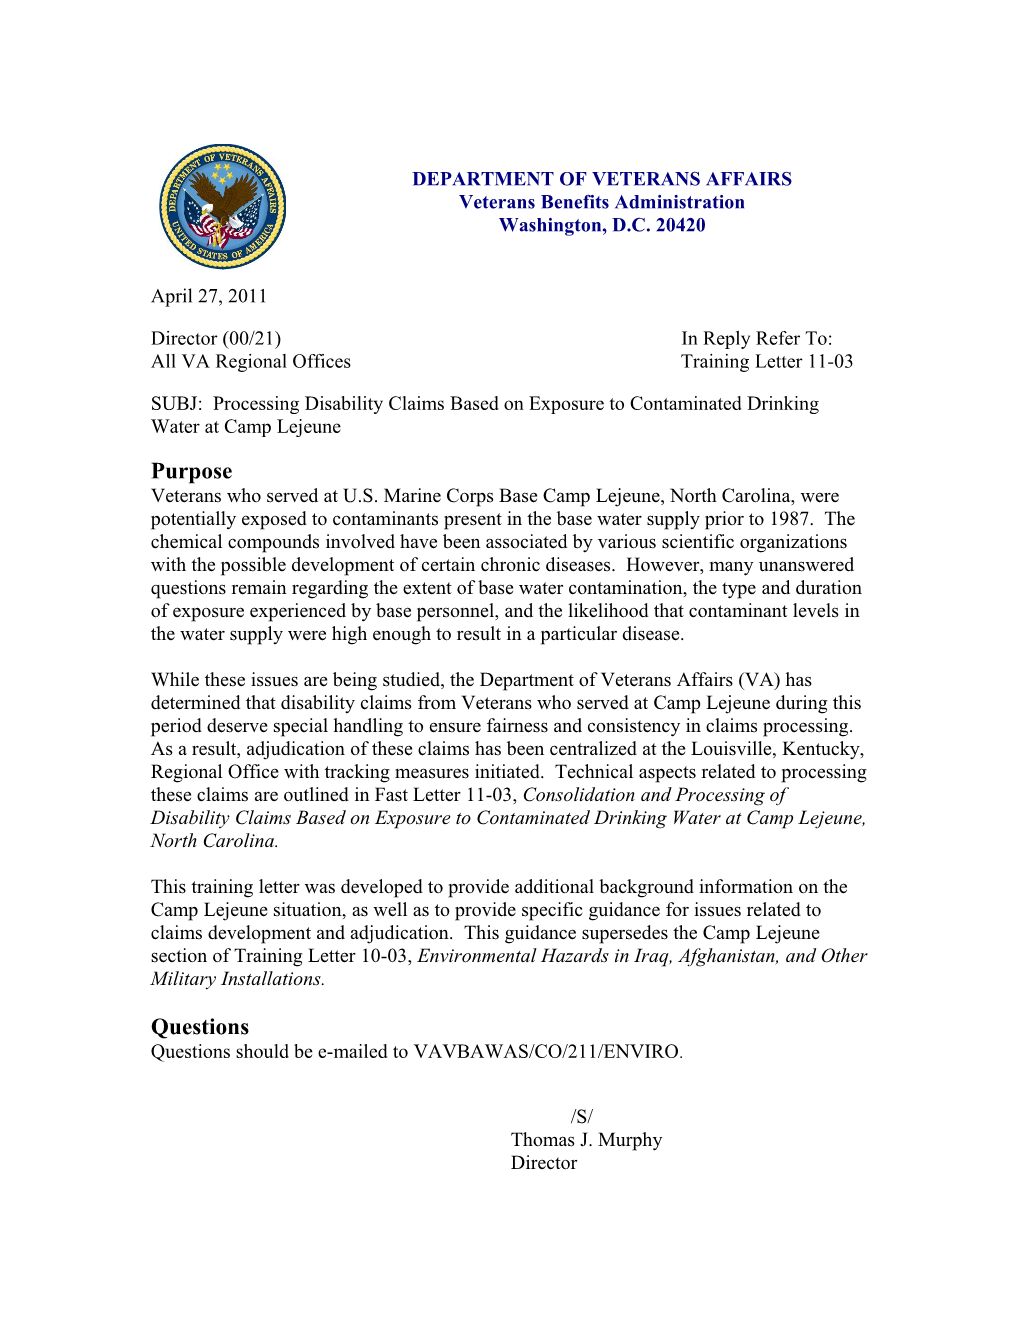 All VA Regional Offices Training Letter 11-03